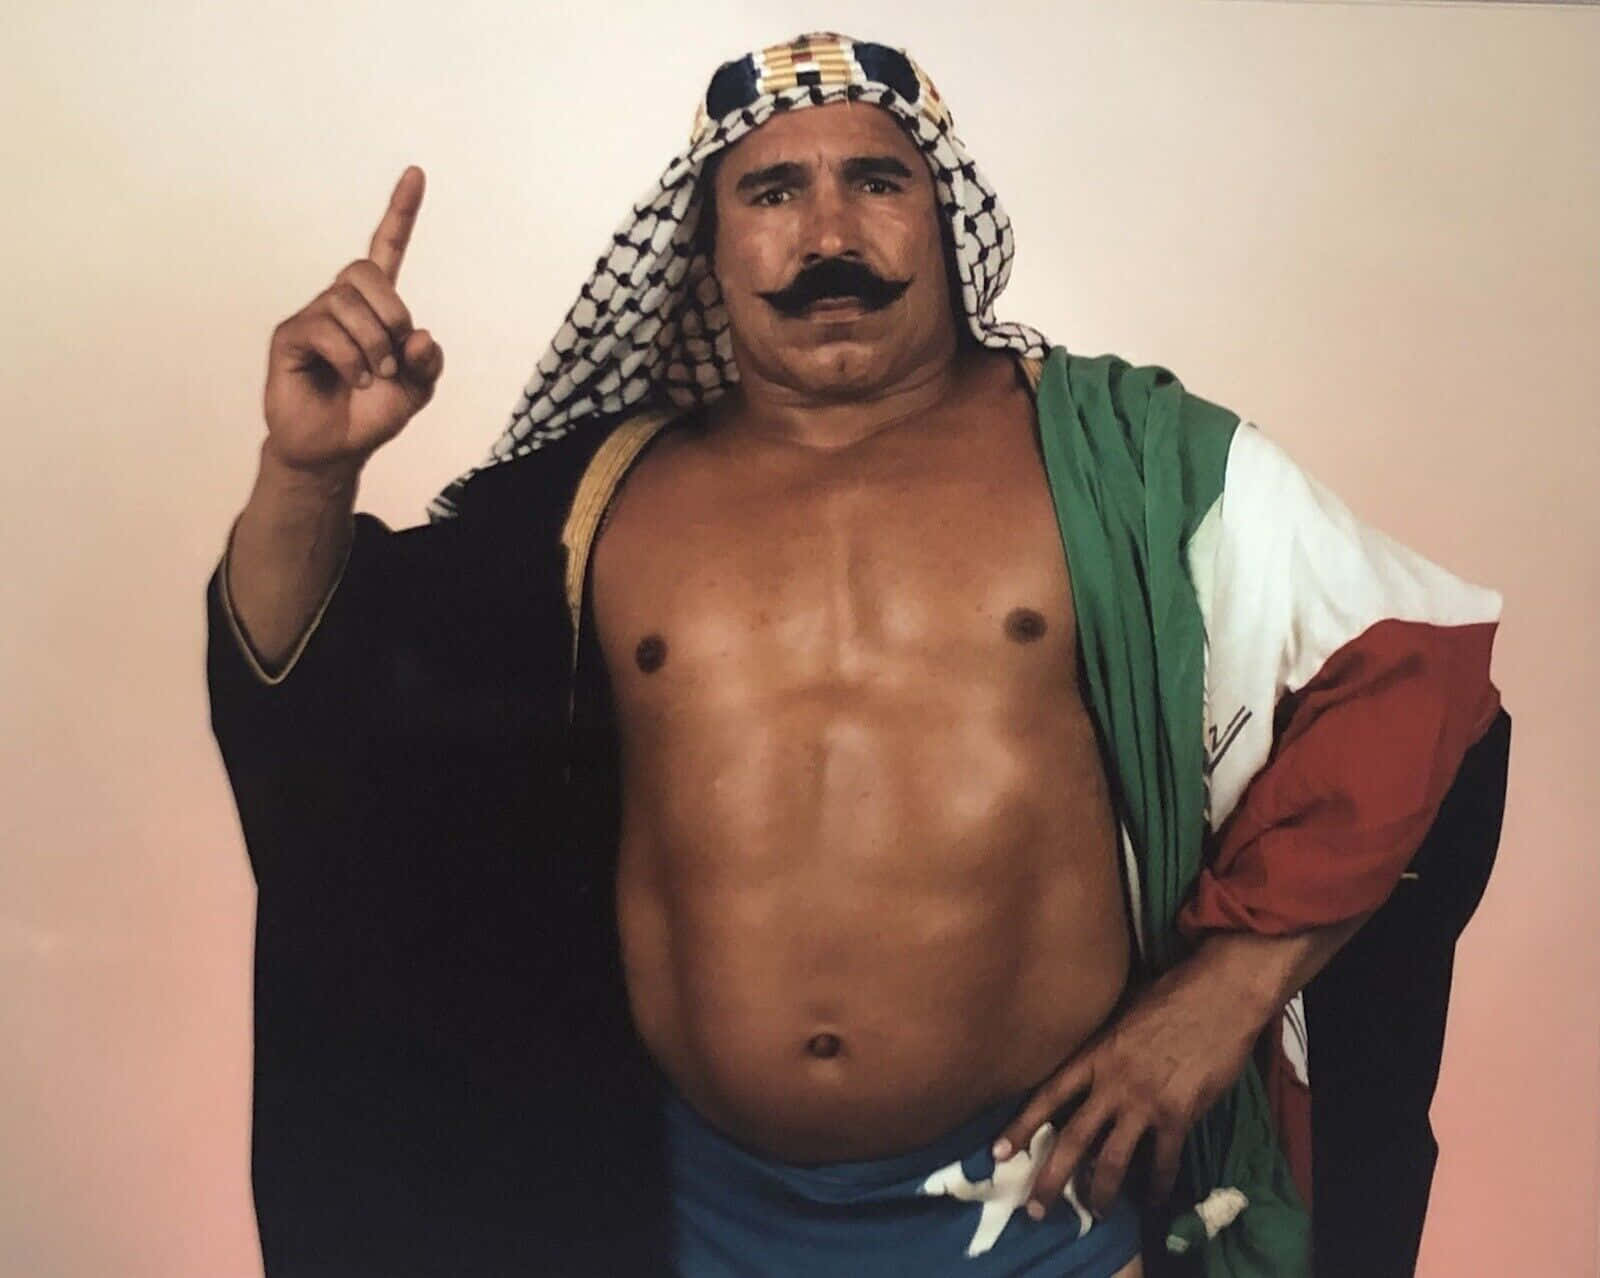 The Iron Sheik Wrestler Portrait Wallpaper